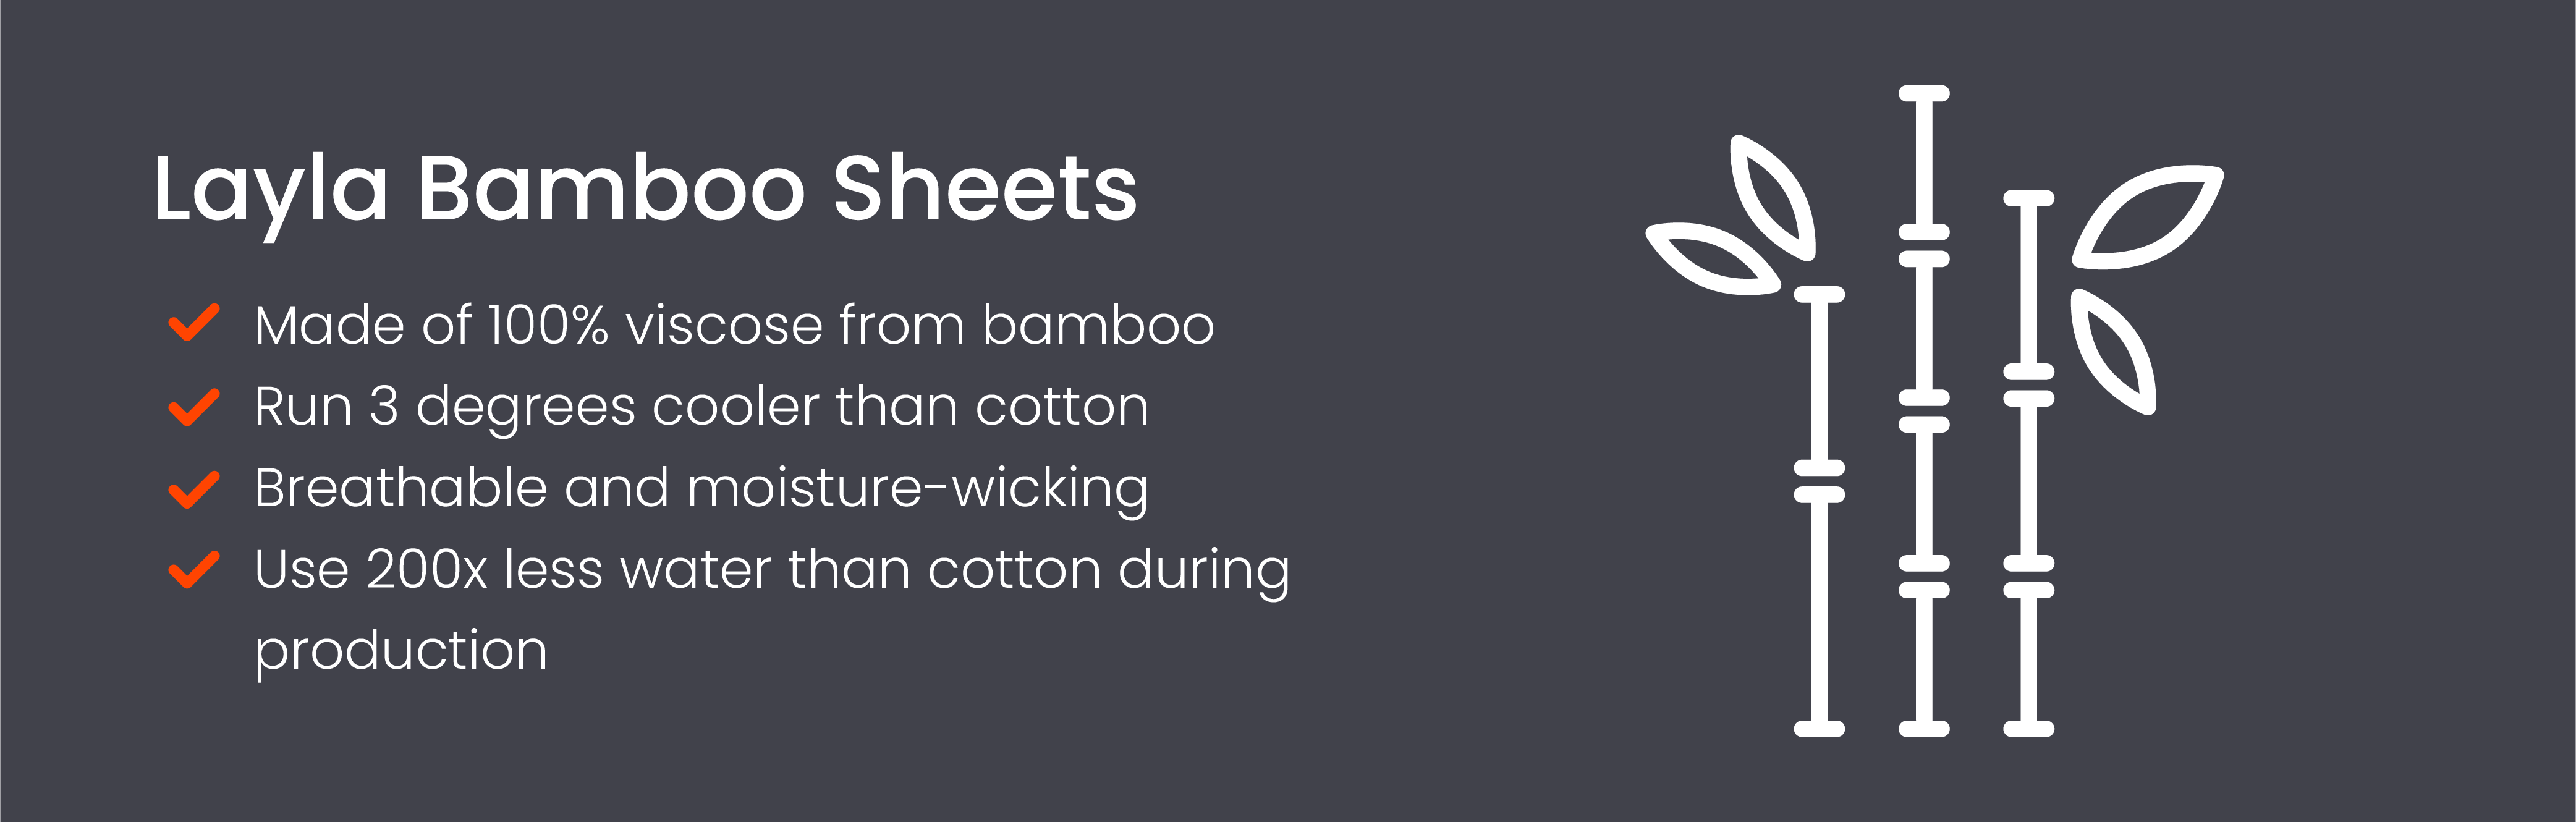 Layla bamboo sheets